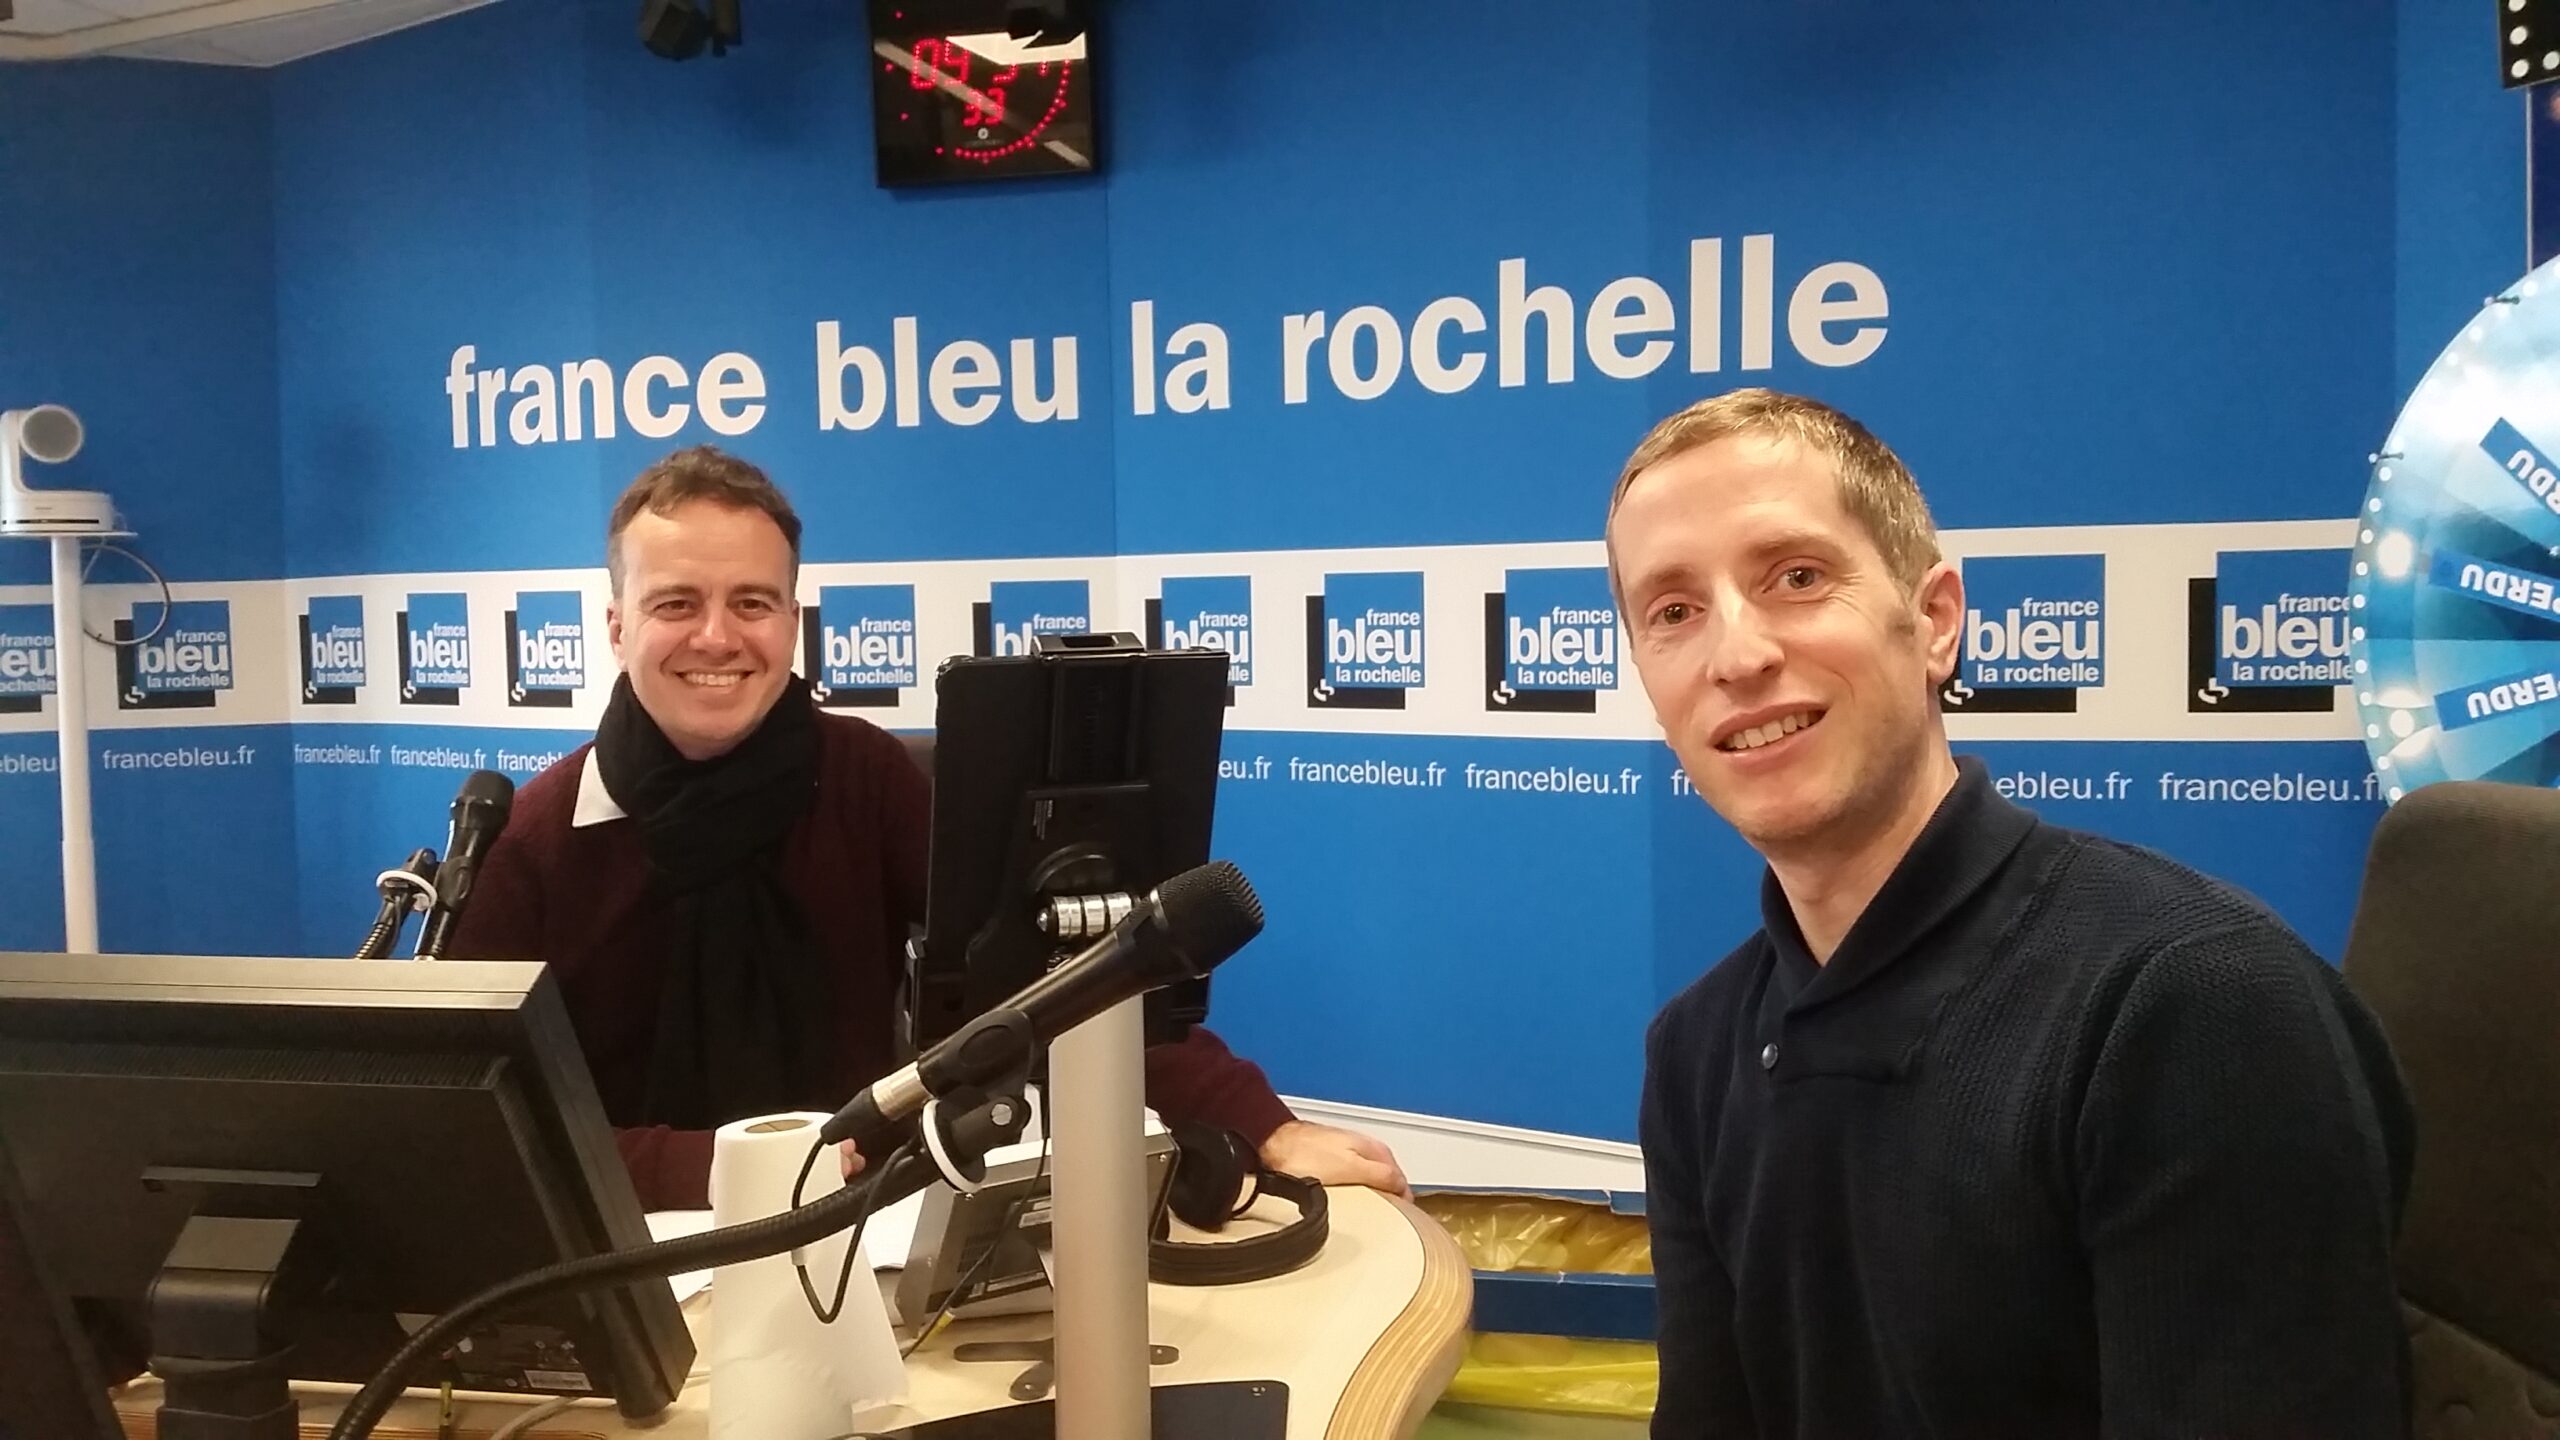 France bleu la rochelle cote expert informatique Franck forgeois